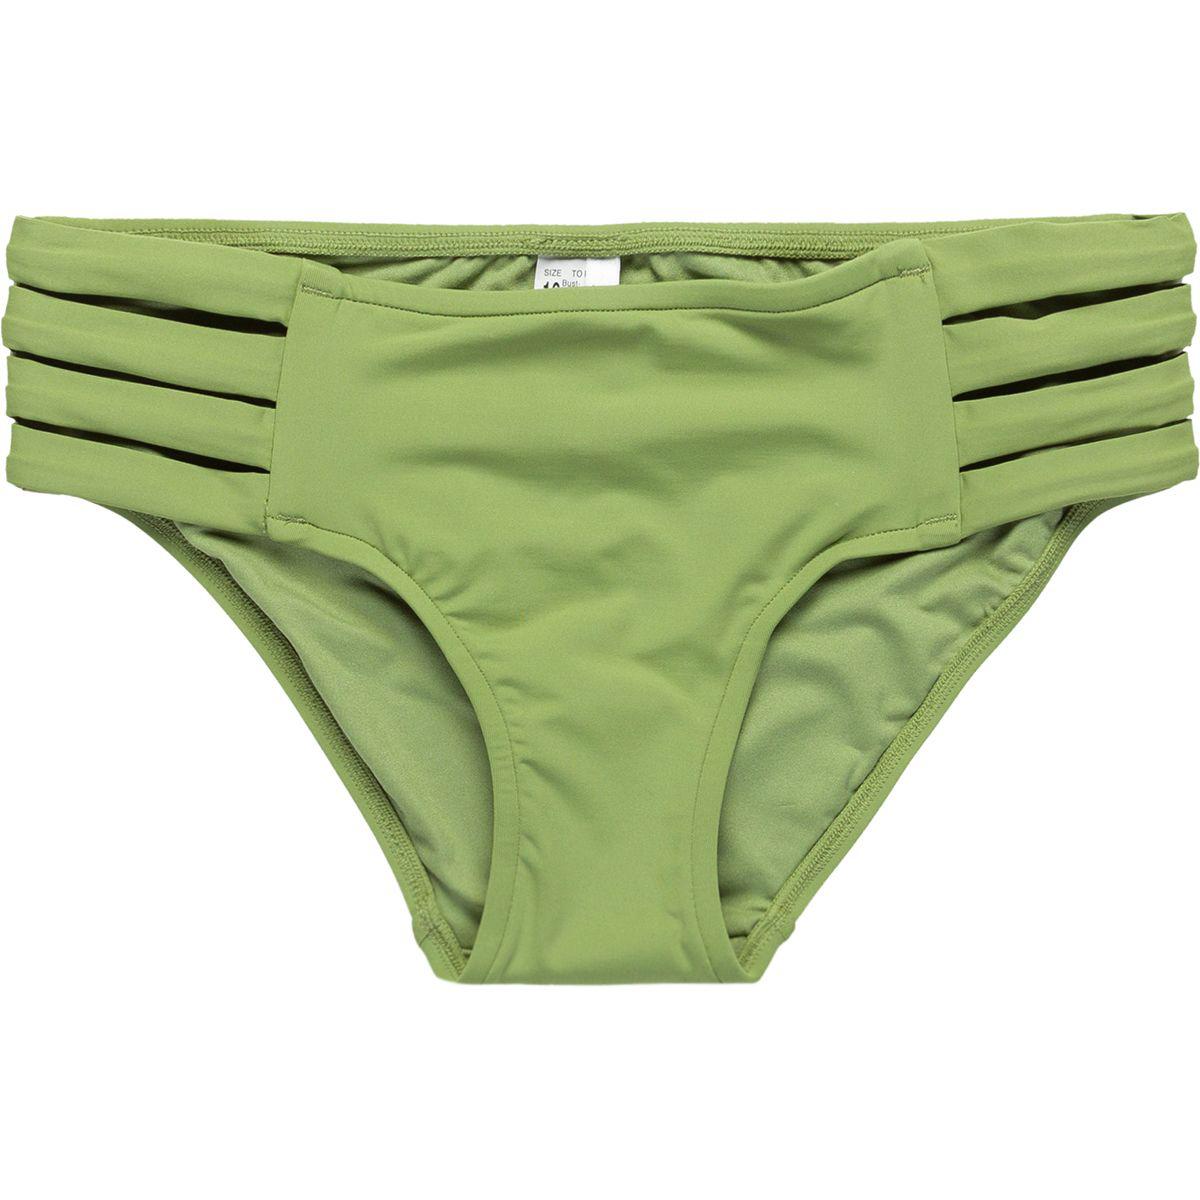 Lyst - Seafolly Active Multi Strap Hipster Bikini Bottom in Green